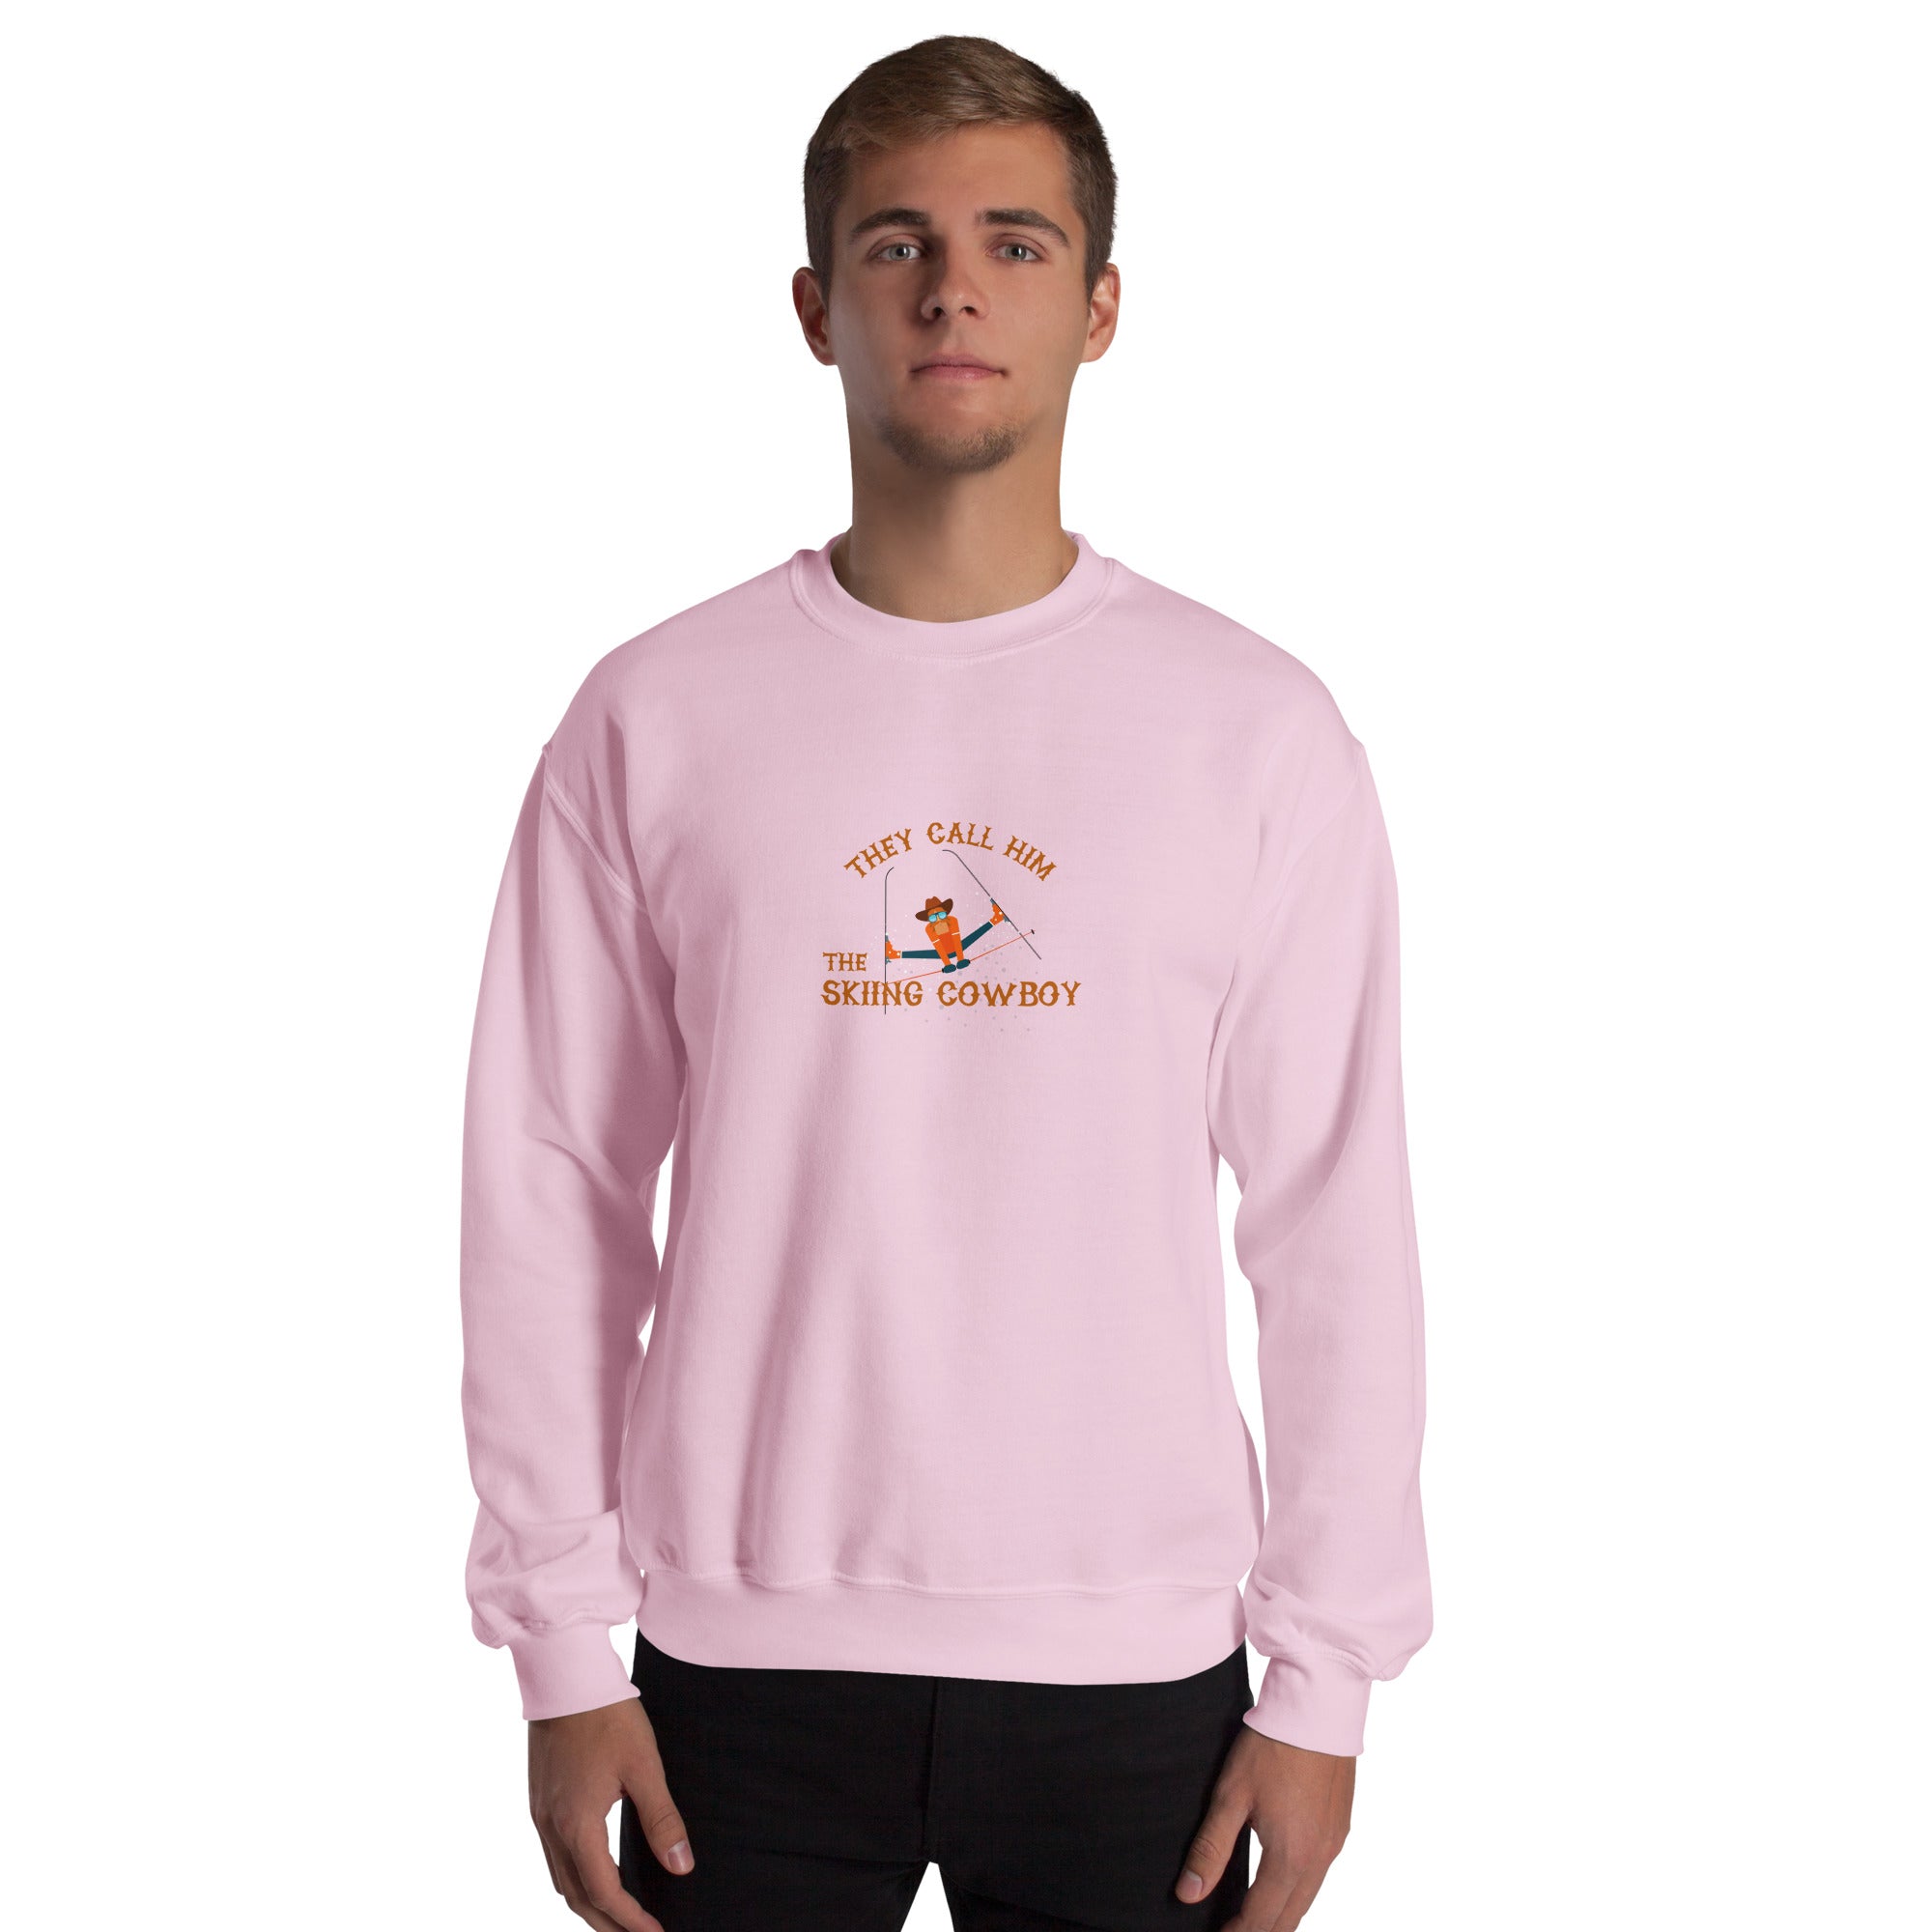 Unisex Sweatshirt Hot Dogger on light colors